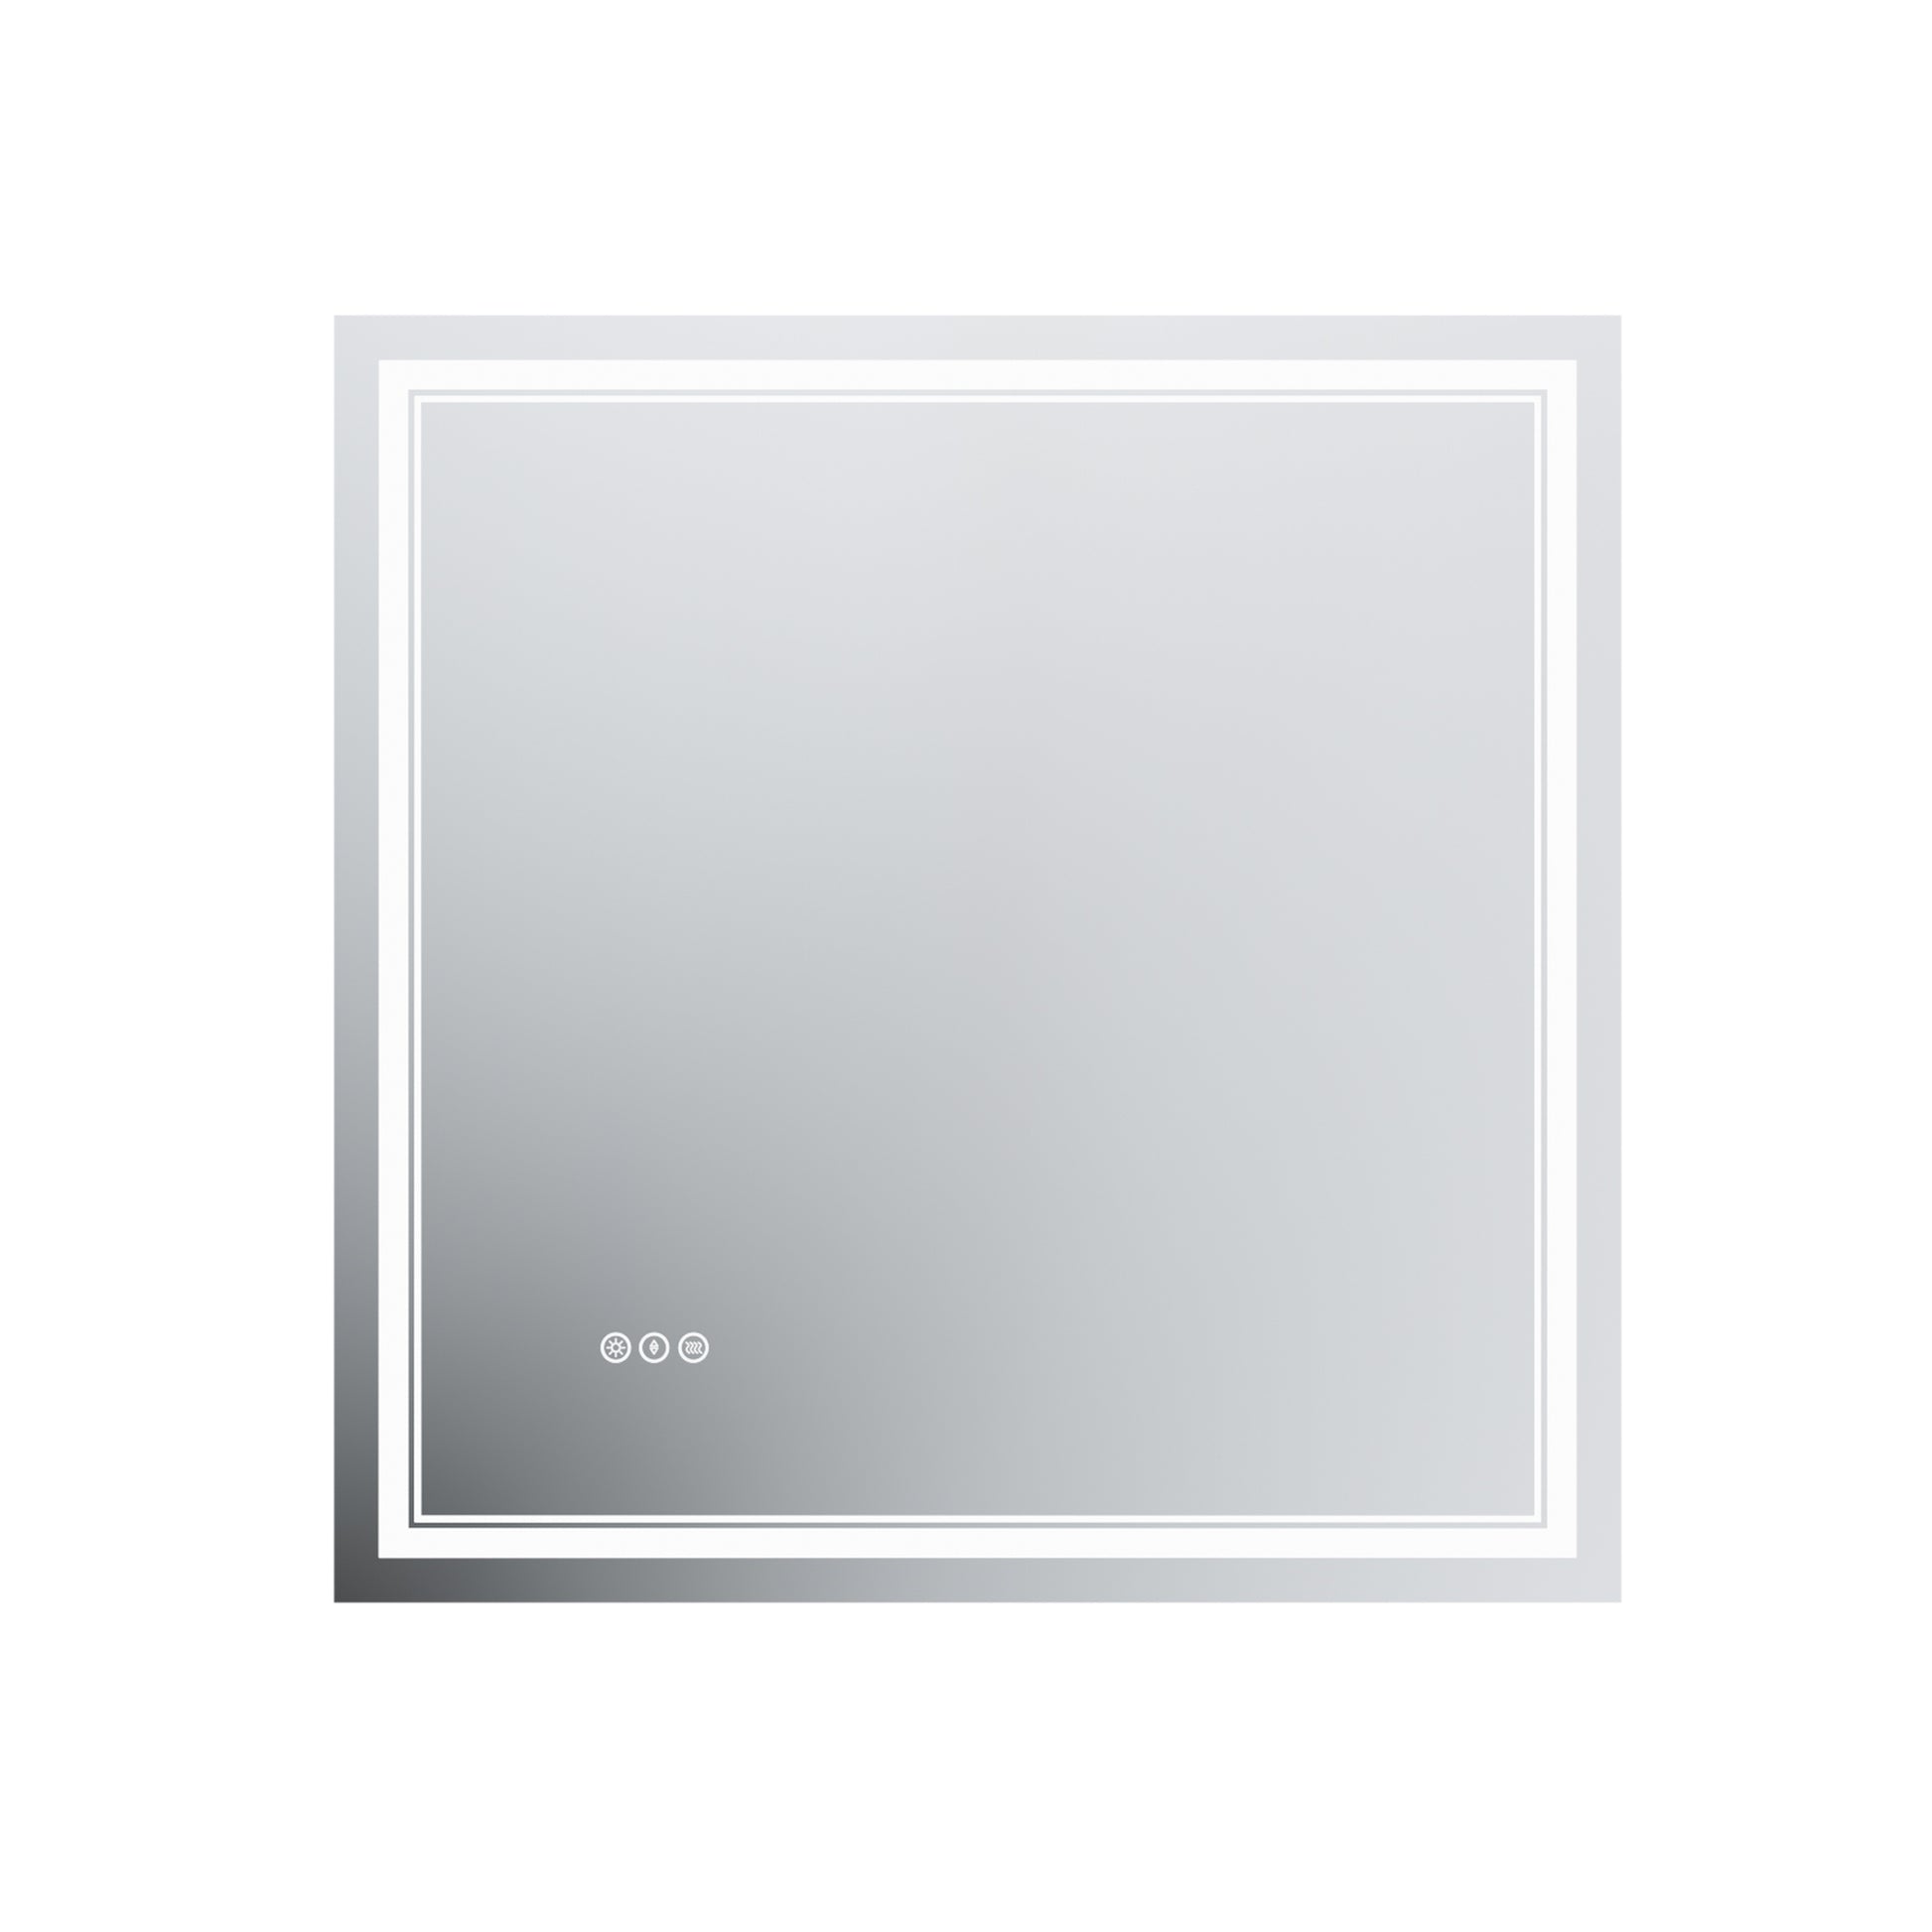 LED Bathroom Mirror, 36x36 inch Bathroom Vanity white-aluminium